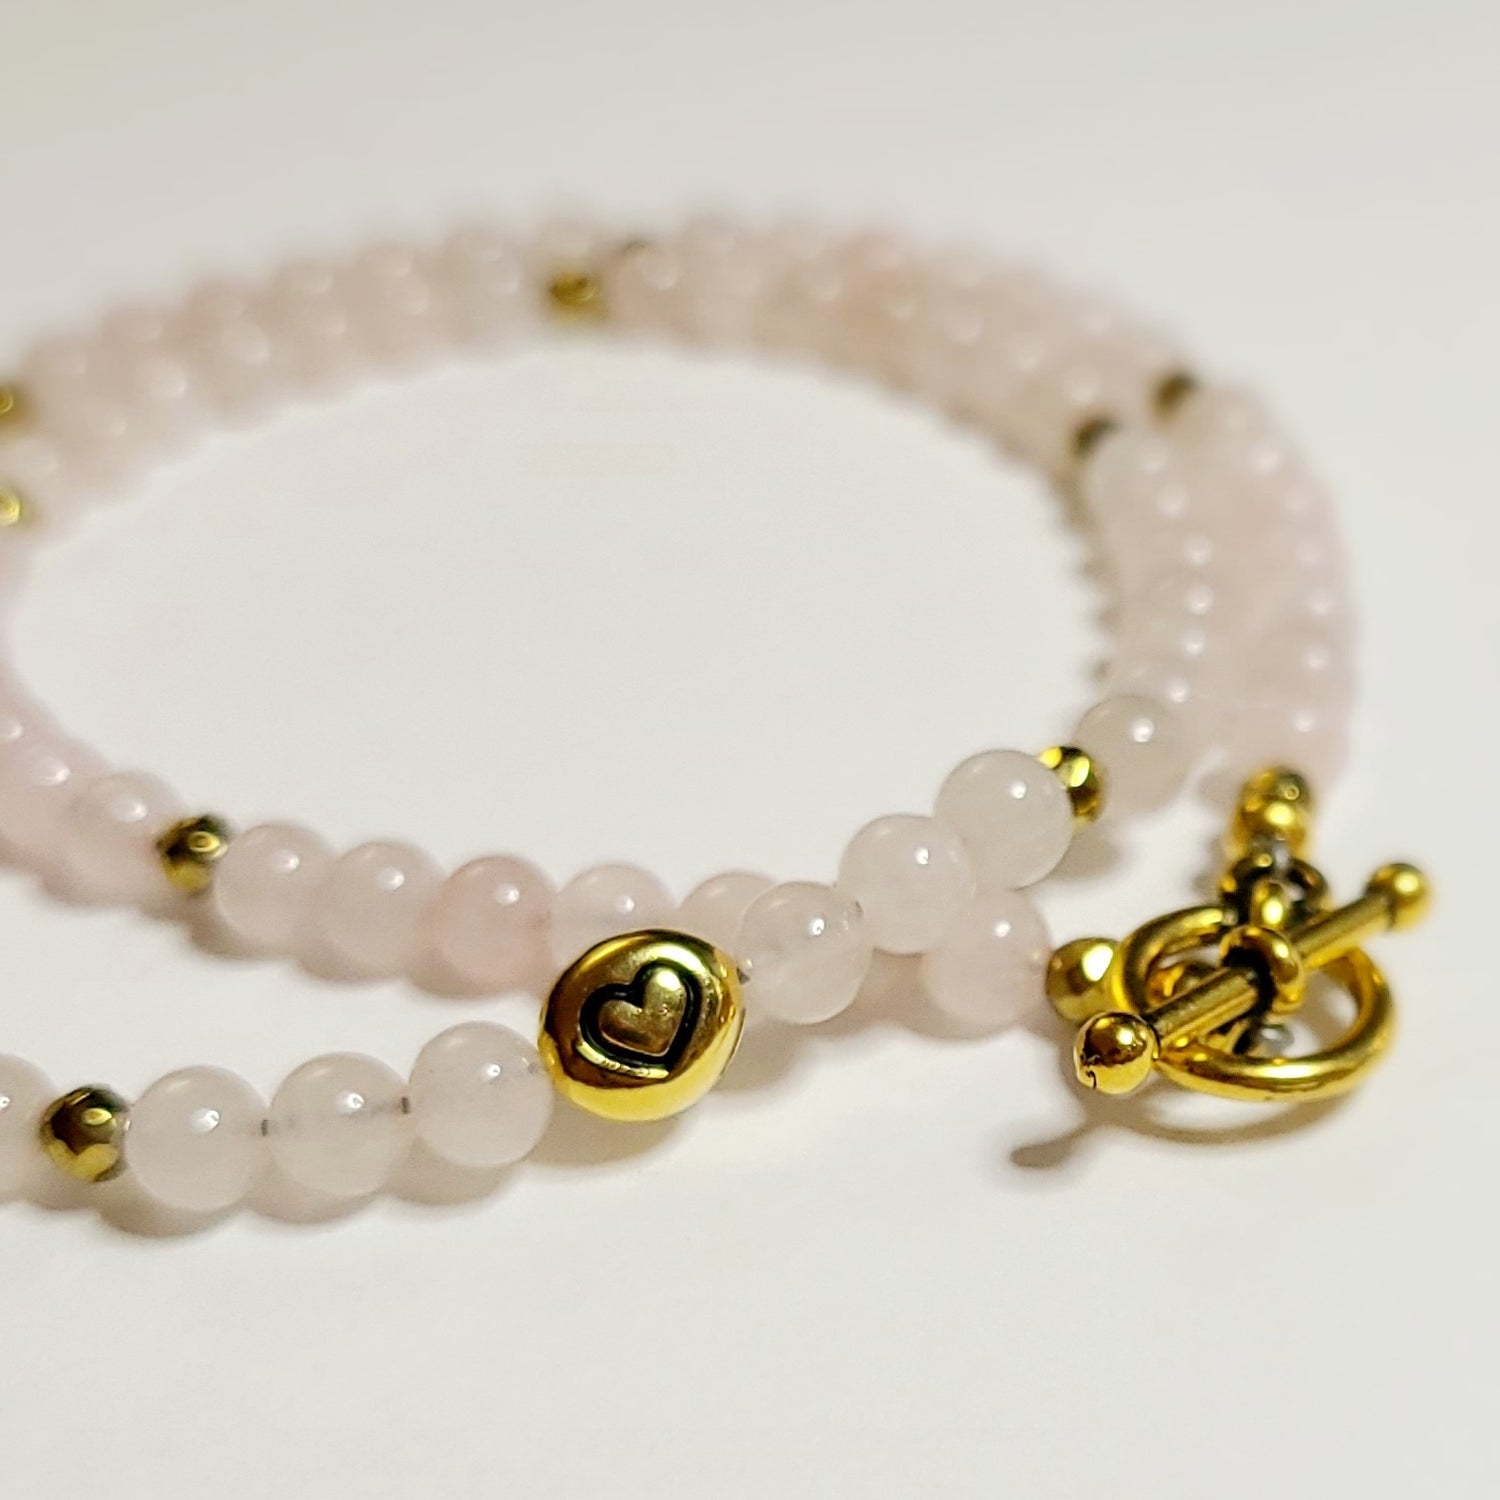 Rose Quartz Necklace OR Bracelet with Tiny Heart